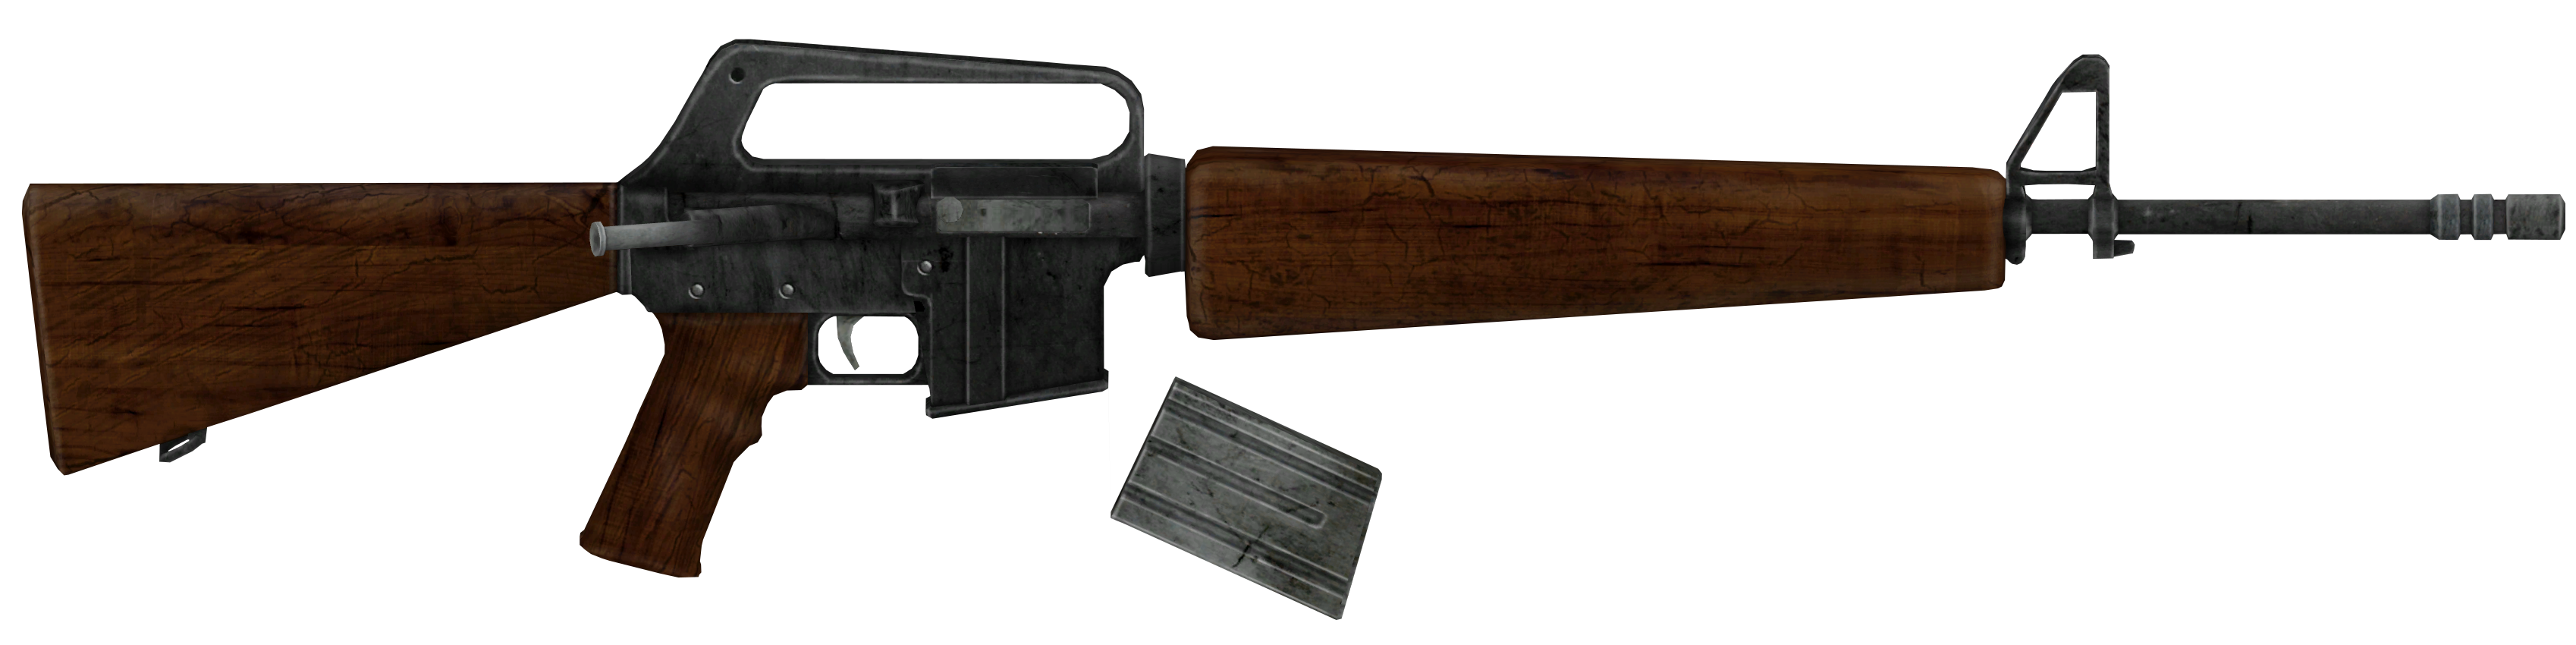 fallout 3 weapon mod kits